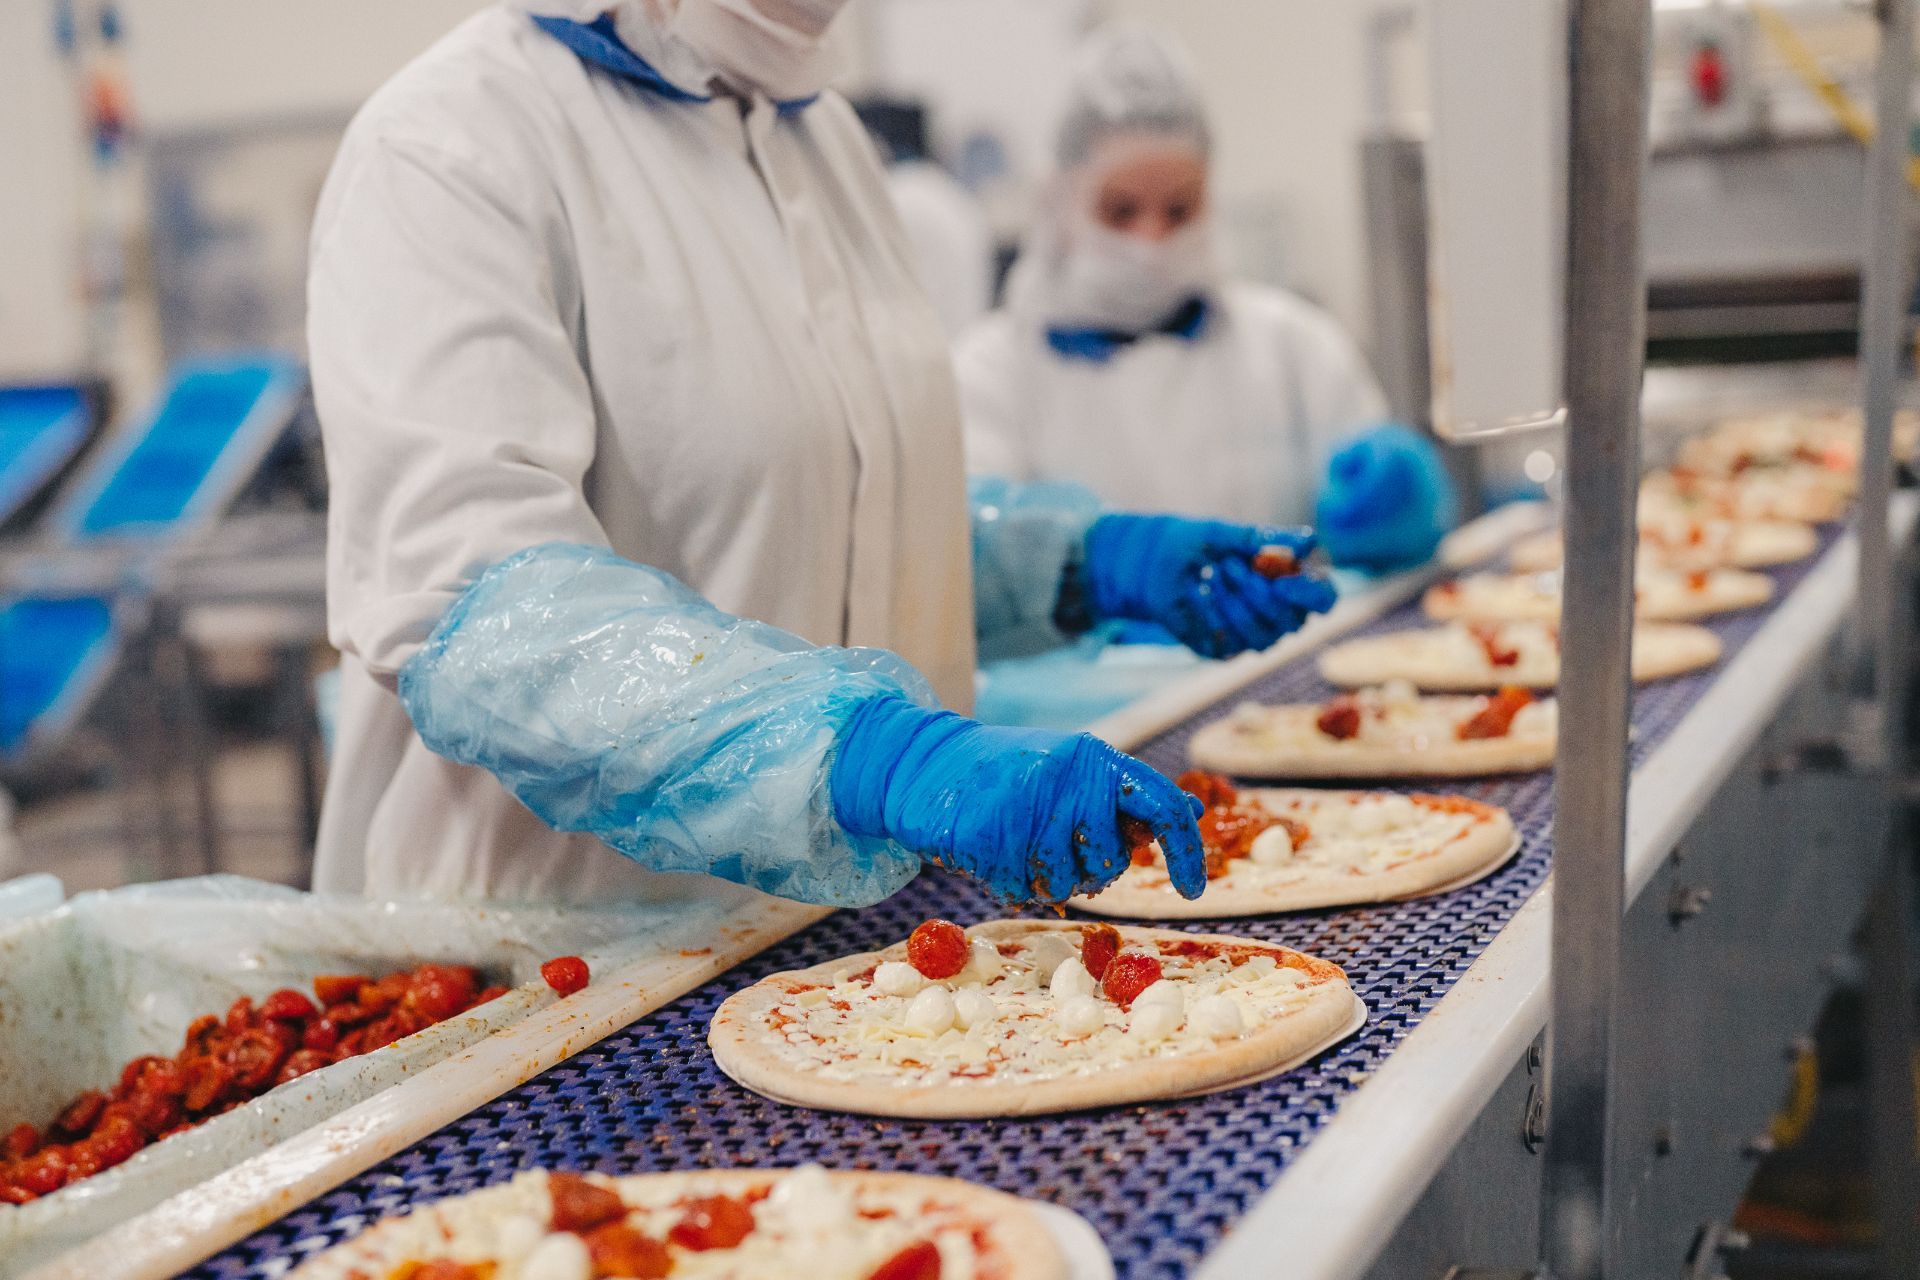 Werknemers leggen topping op pizza